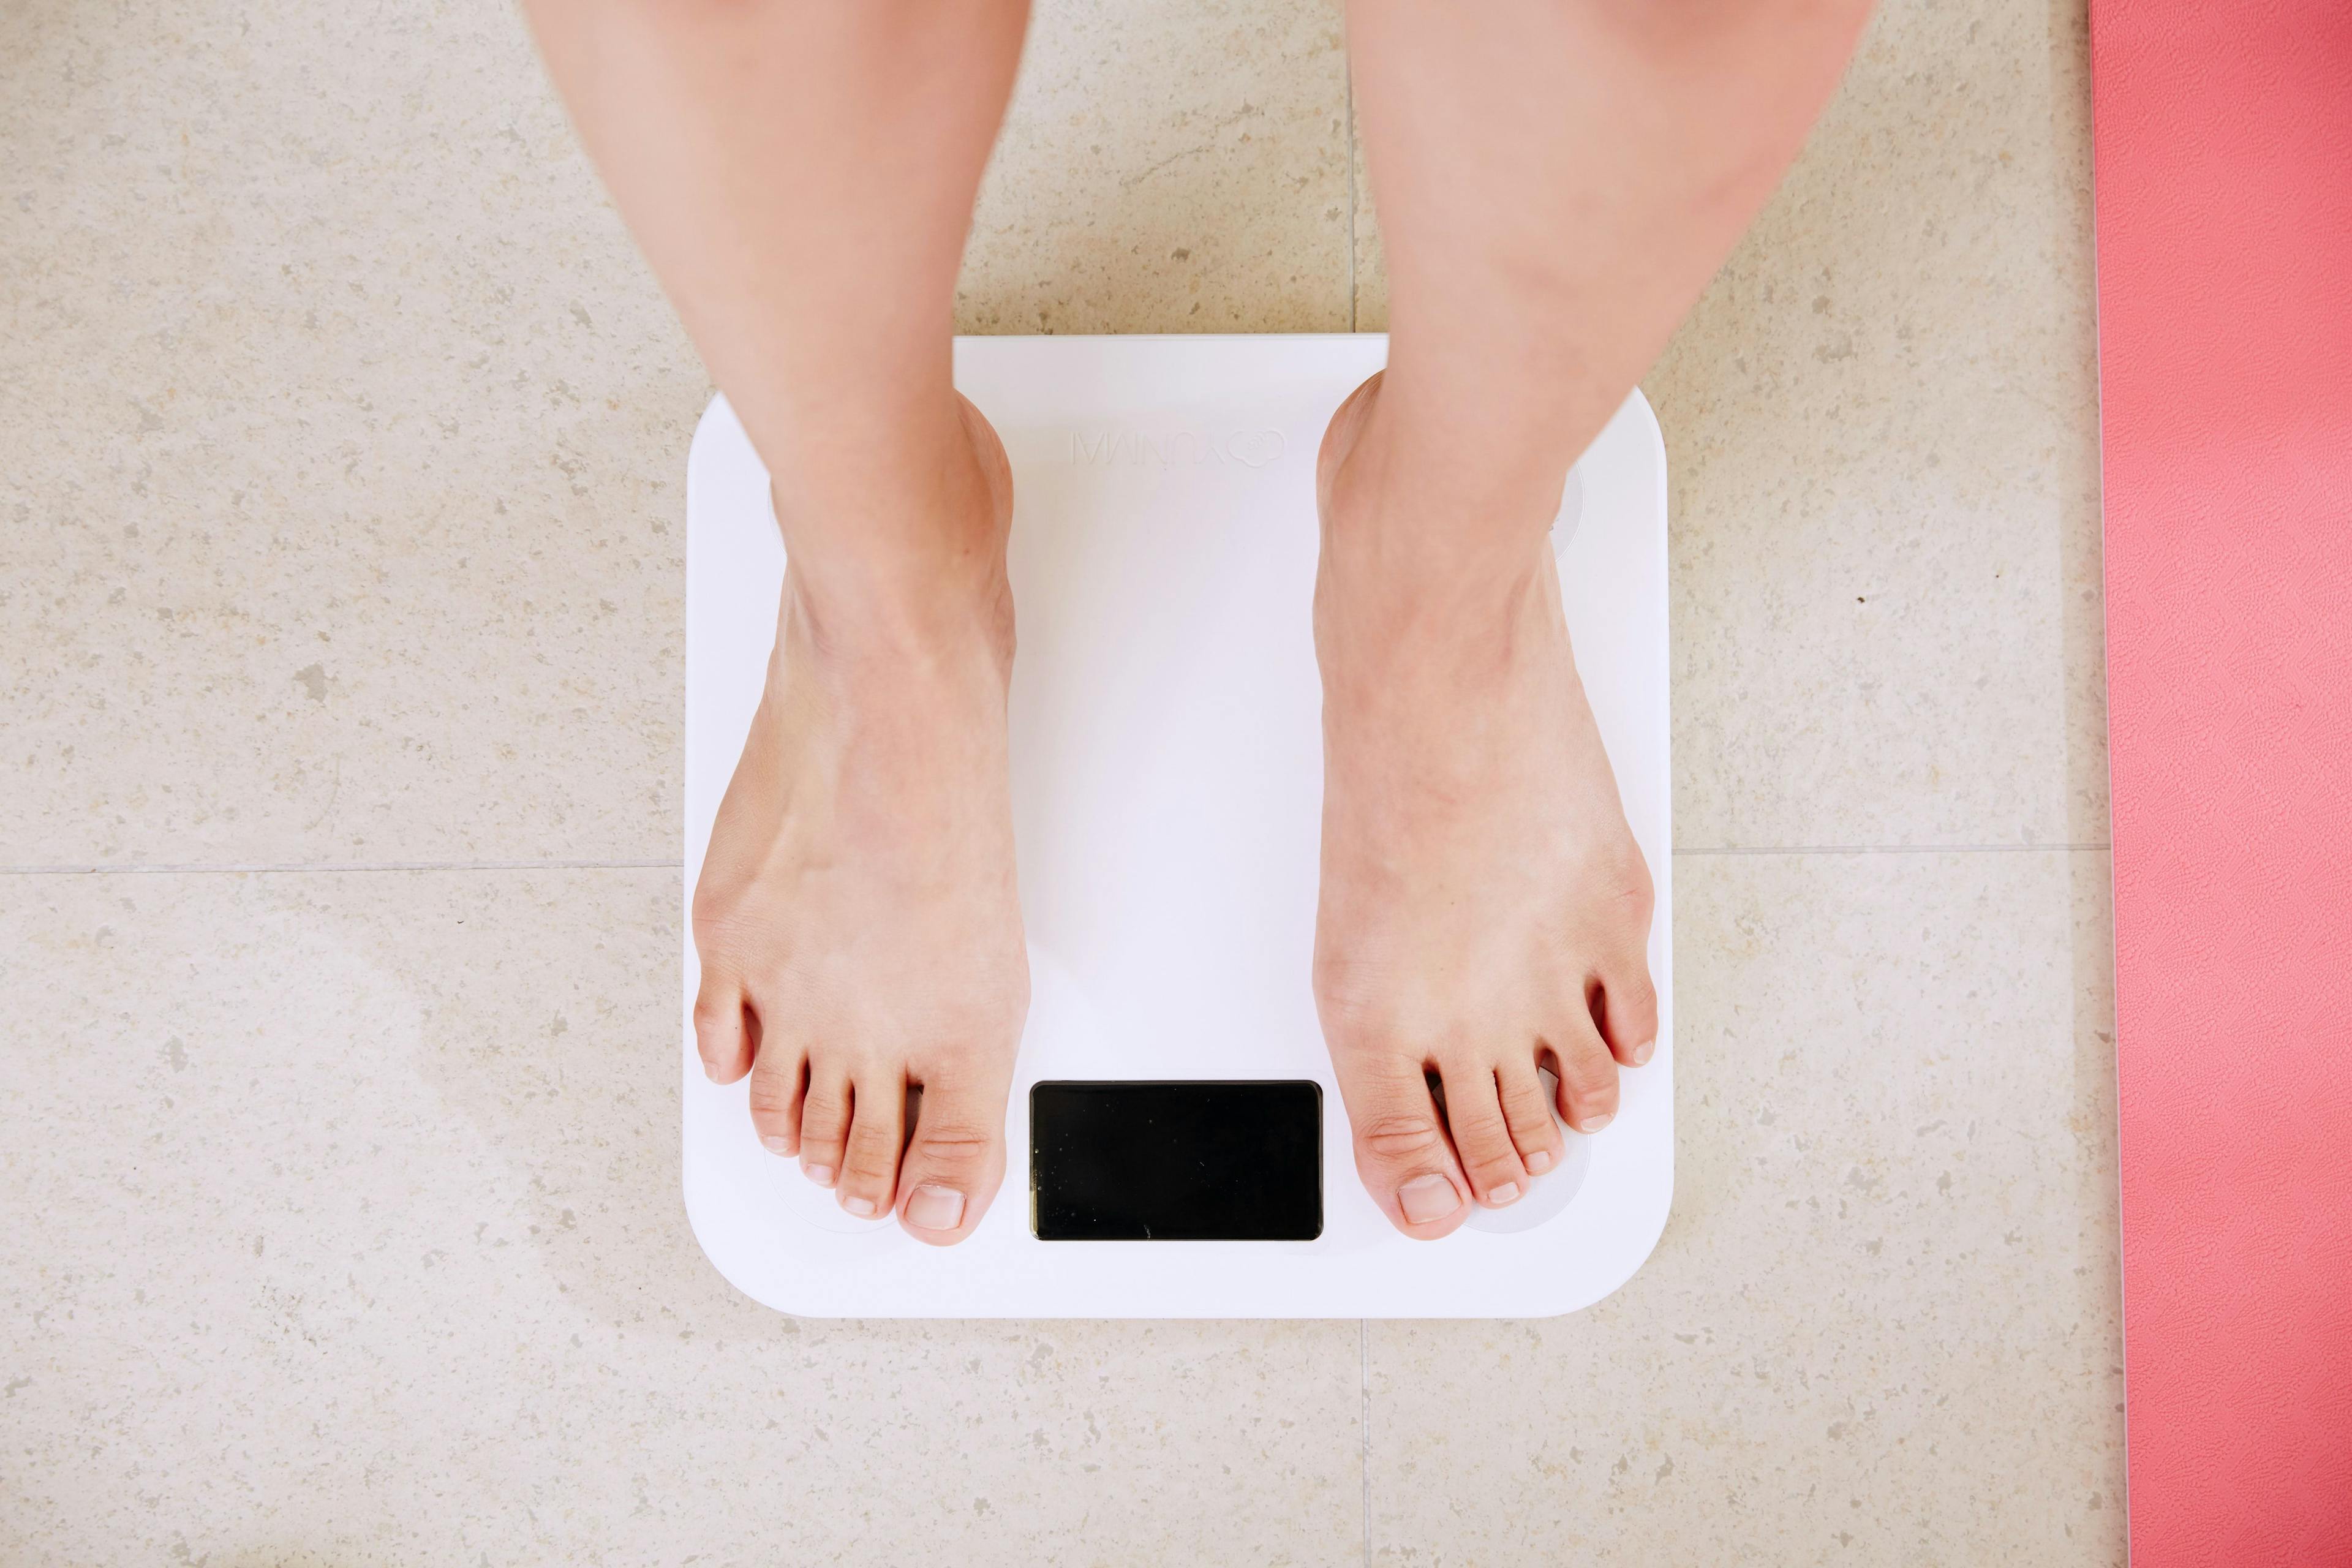 Imaging Estrogen-Related Enzyme Could Predict Obesity Struggles